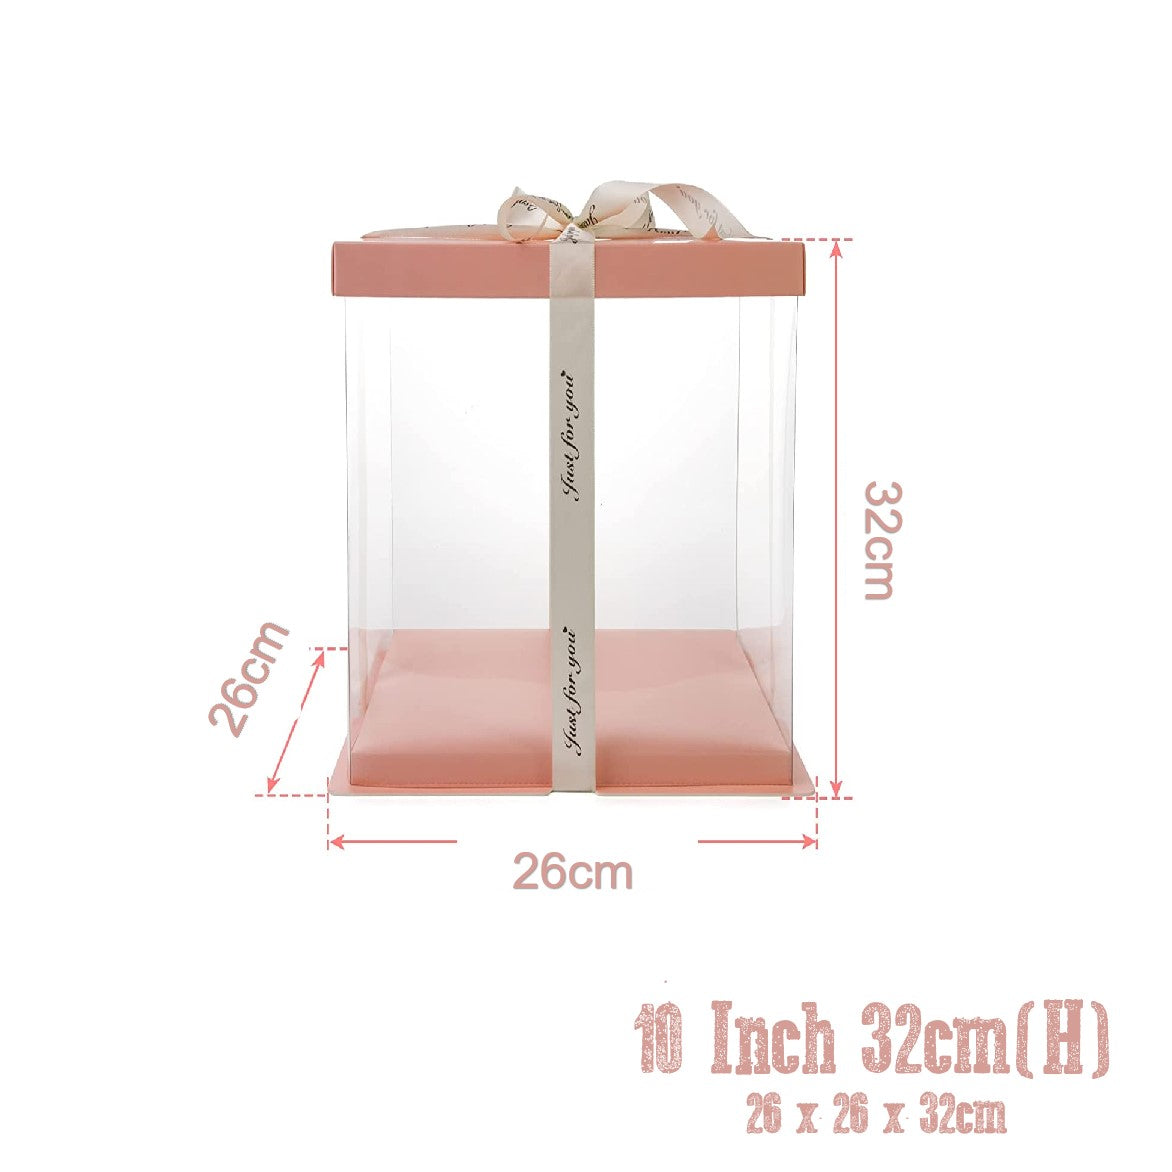 Cake Packaging - Elegant 10 Inch Cake Box Packaging 32cm Height - Pink